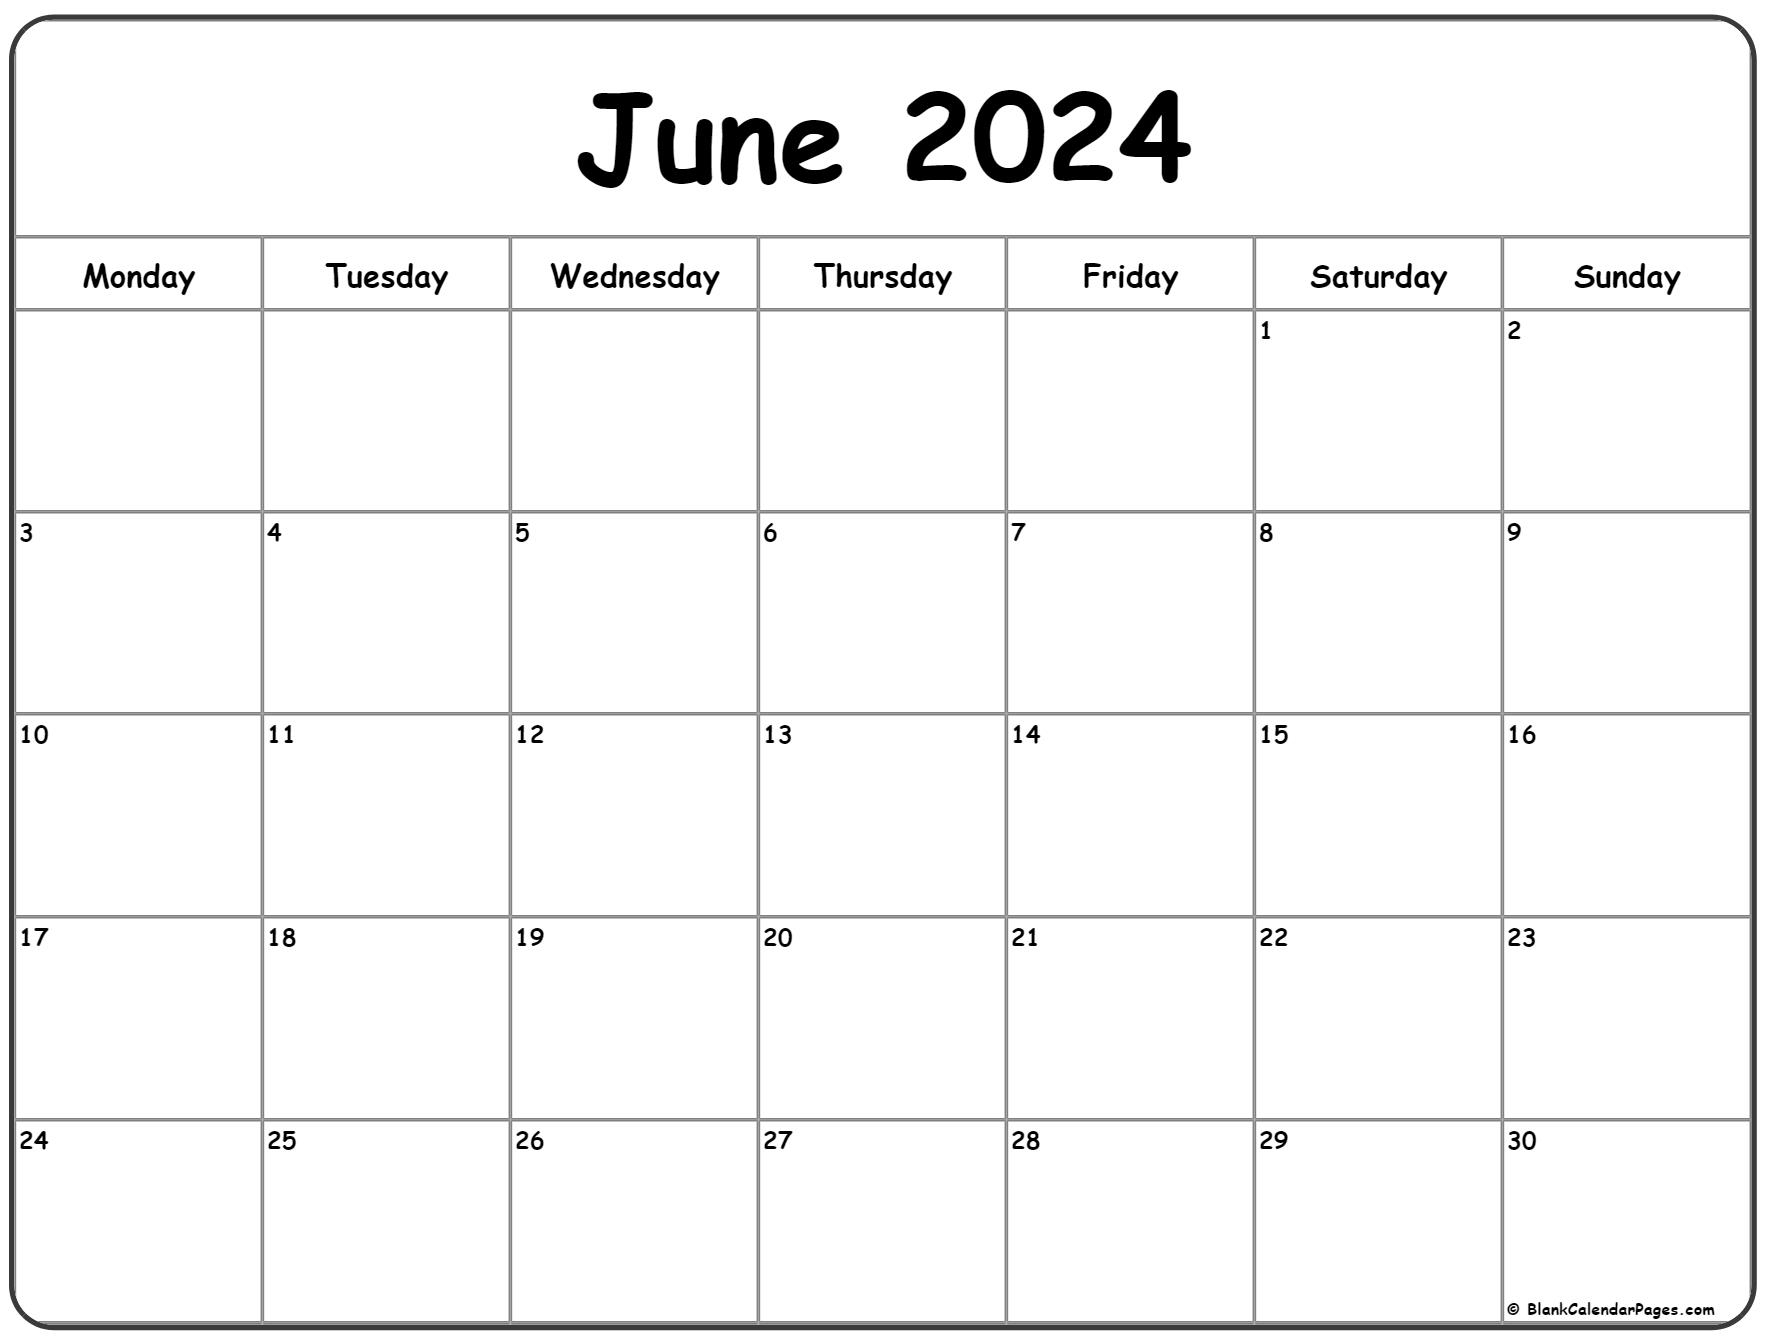 June 2024 Monday calendar. Monday to Sunday